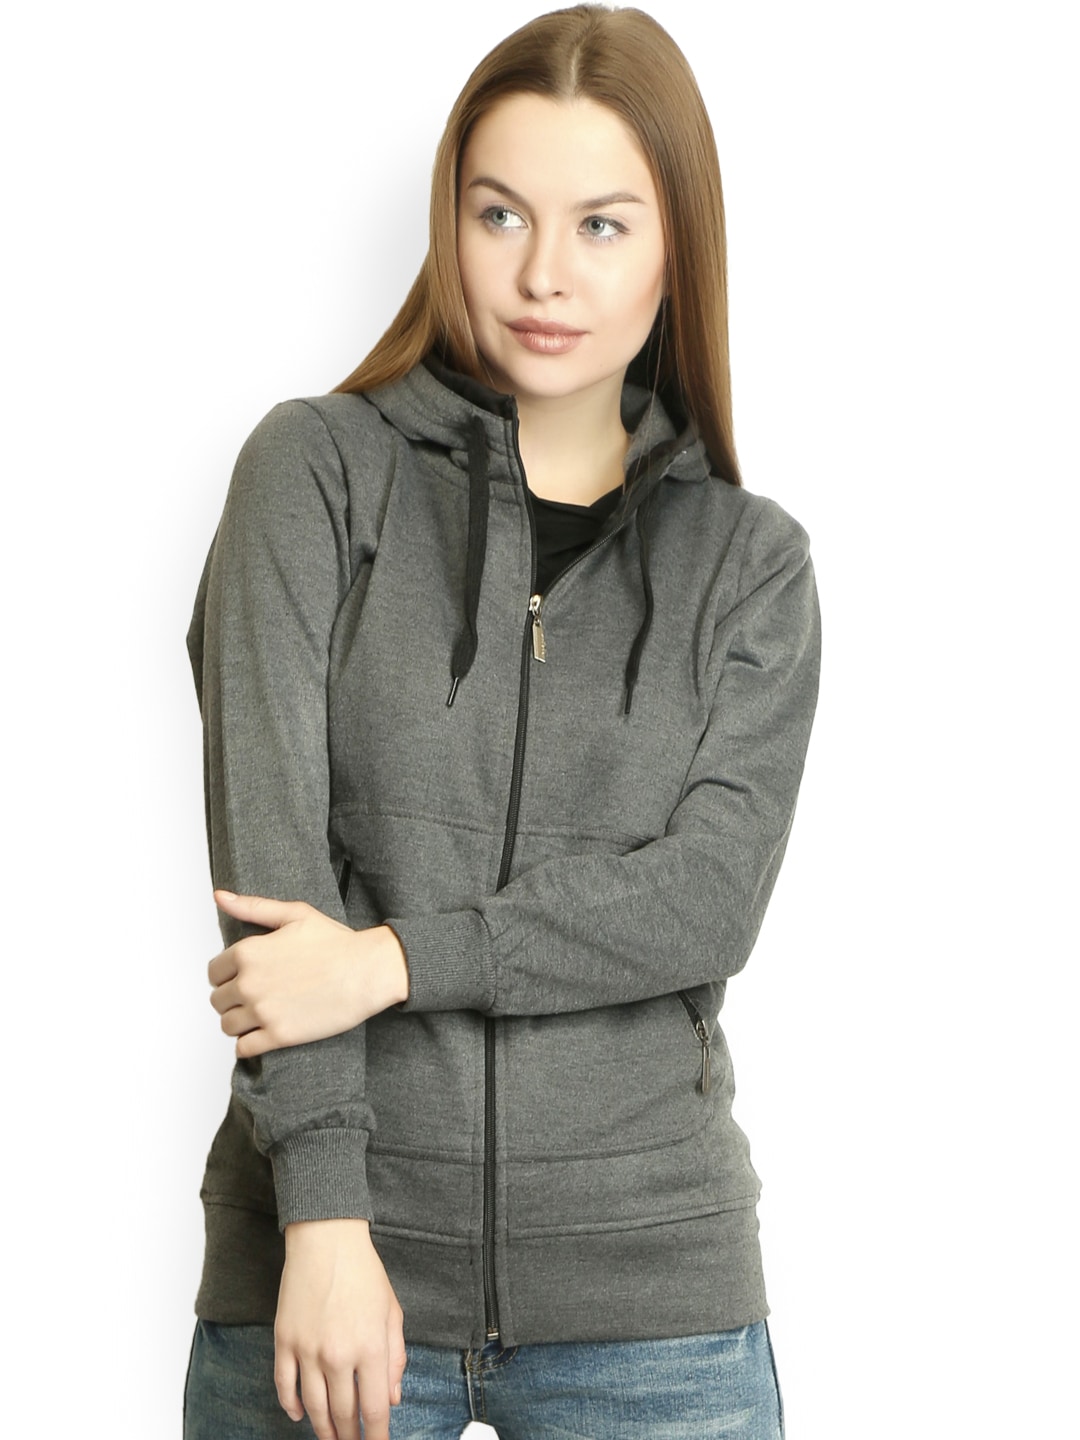 Belle Fille Grey Polyester Fleece Hooded Sweatshirt Price in India